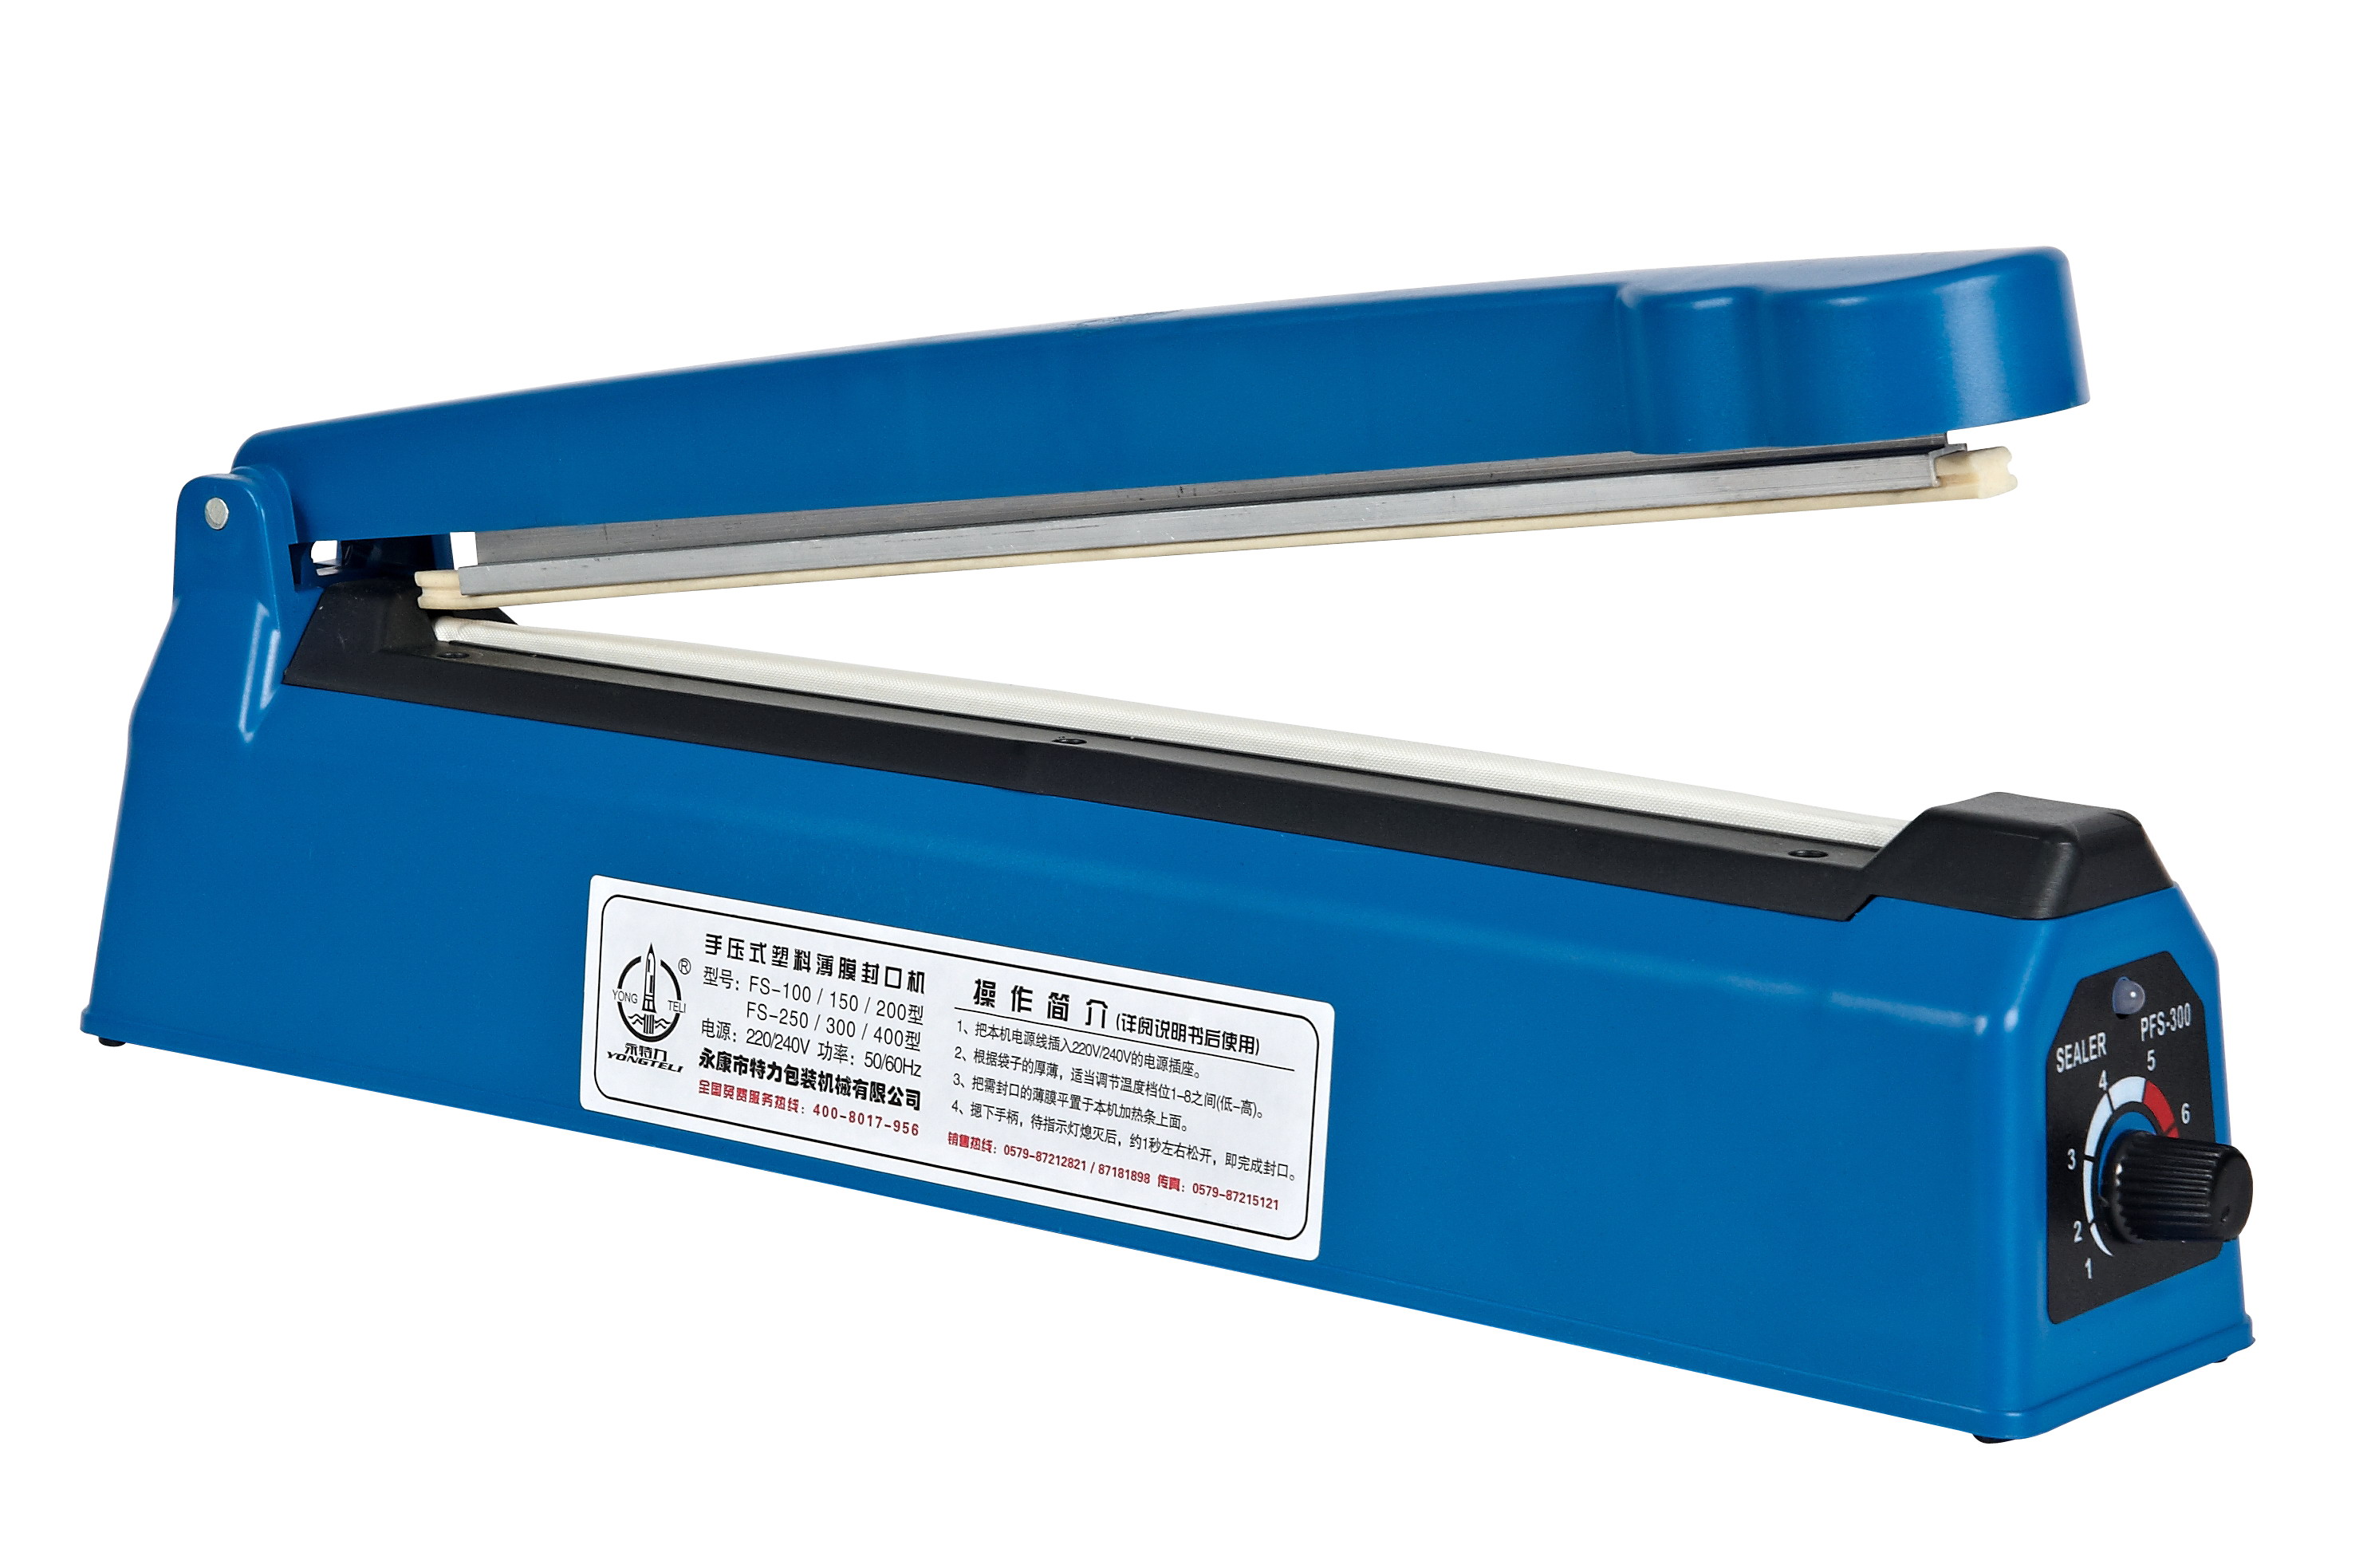 <strong>Impulse Sealer Manual Poly Film Bag Sealing Machine PFS-200</strong>